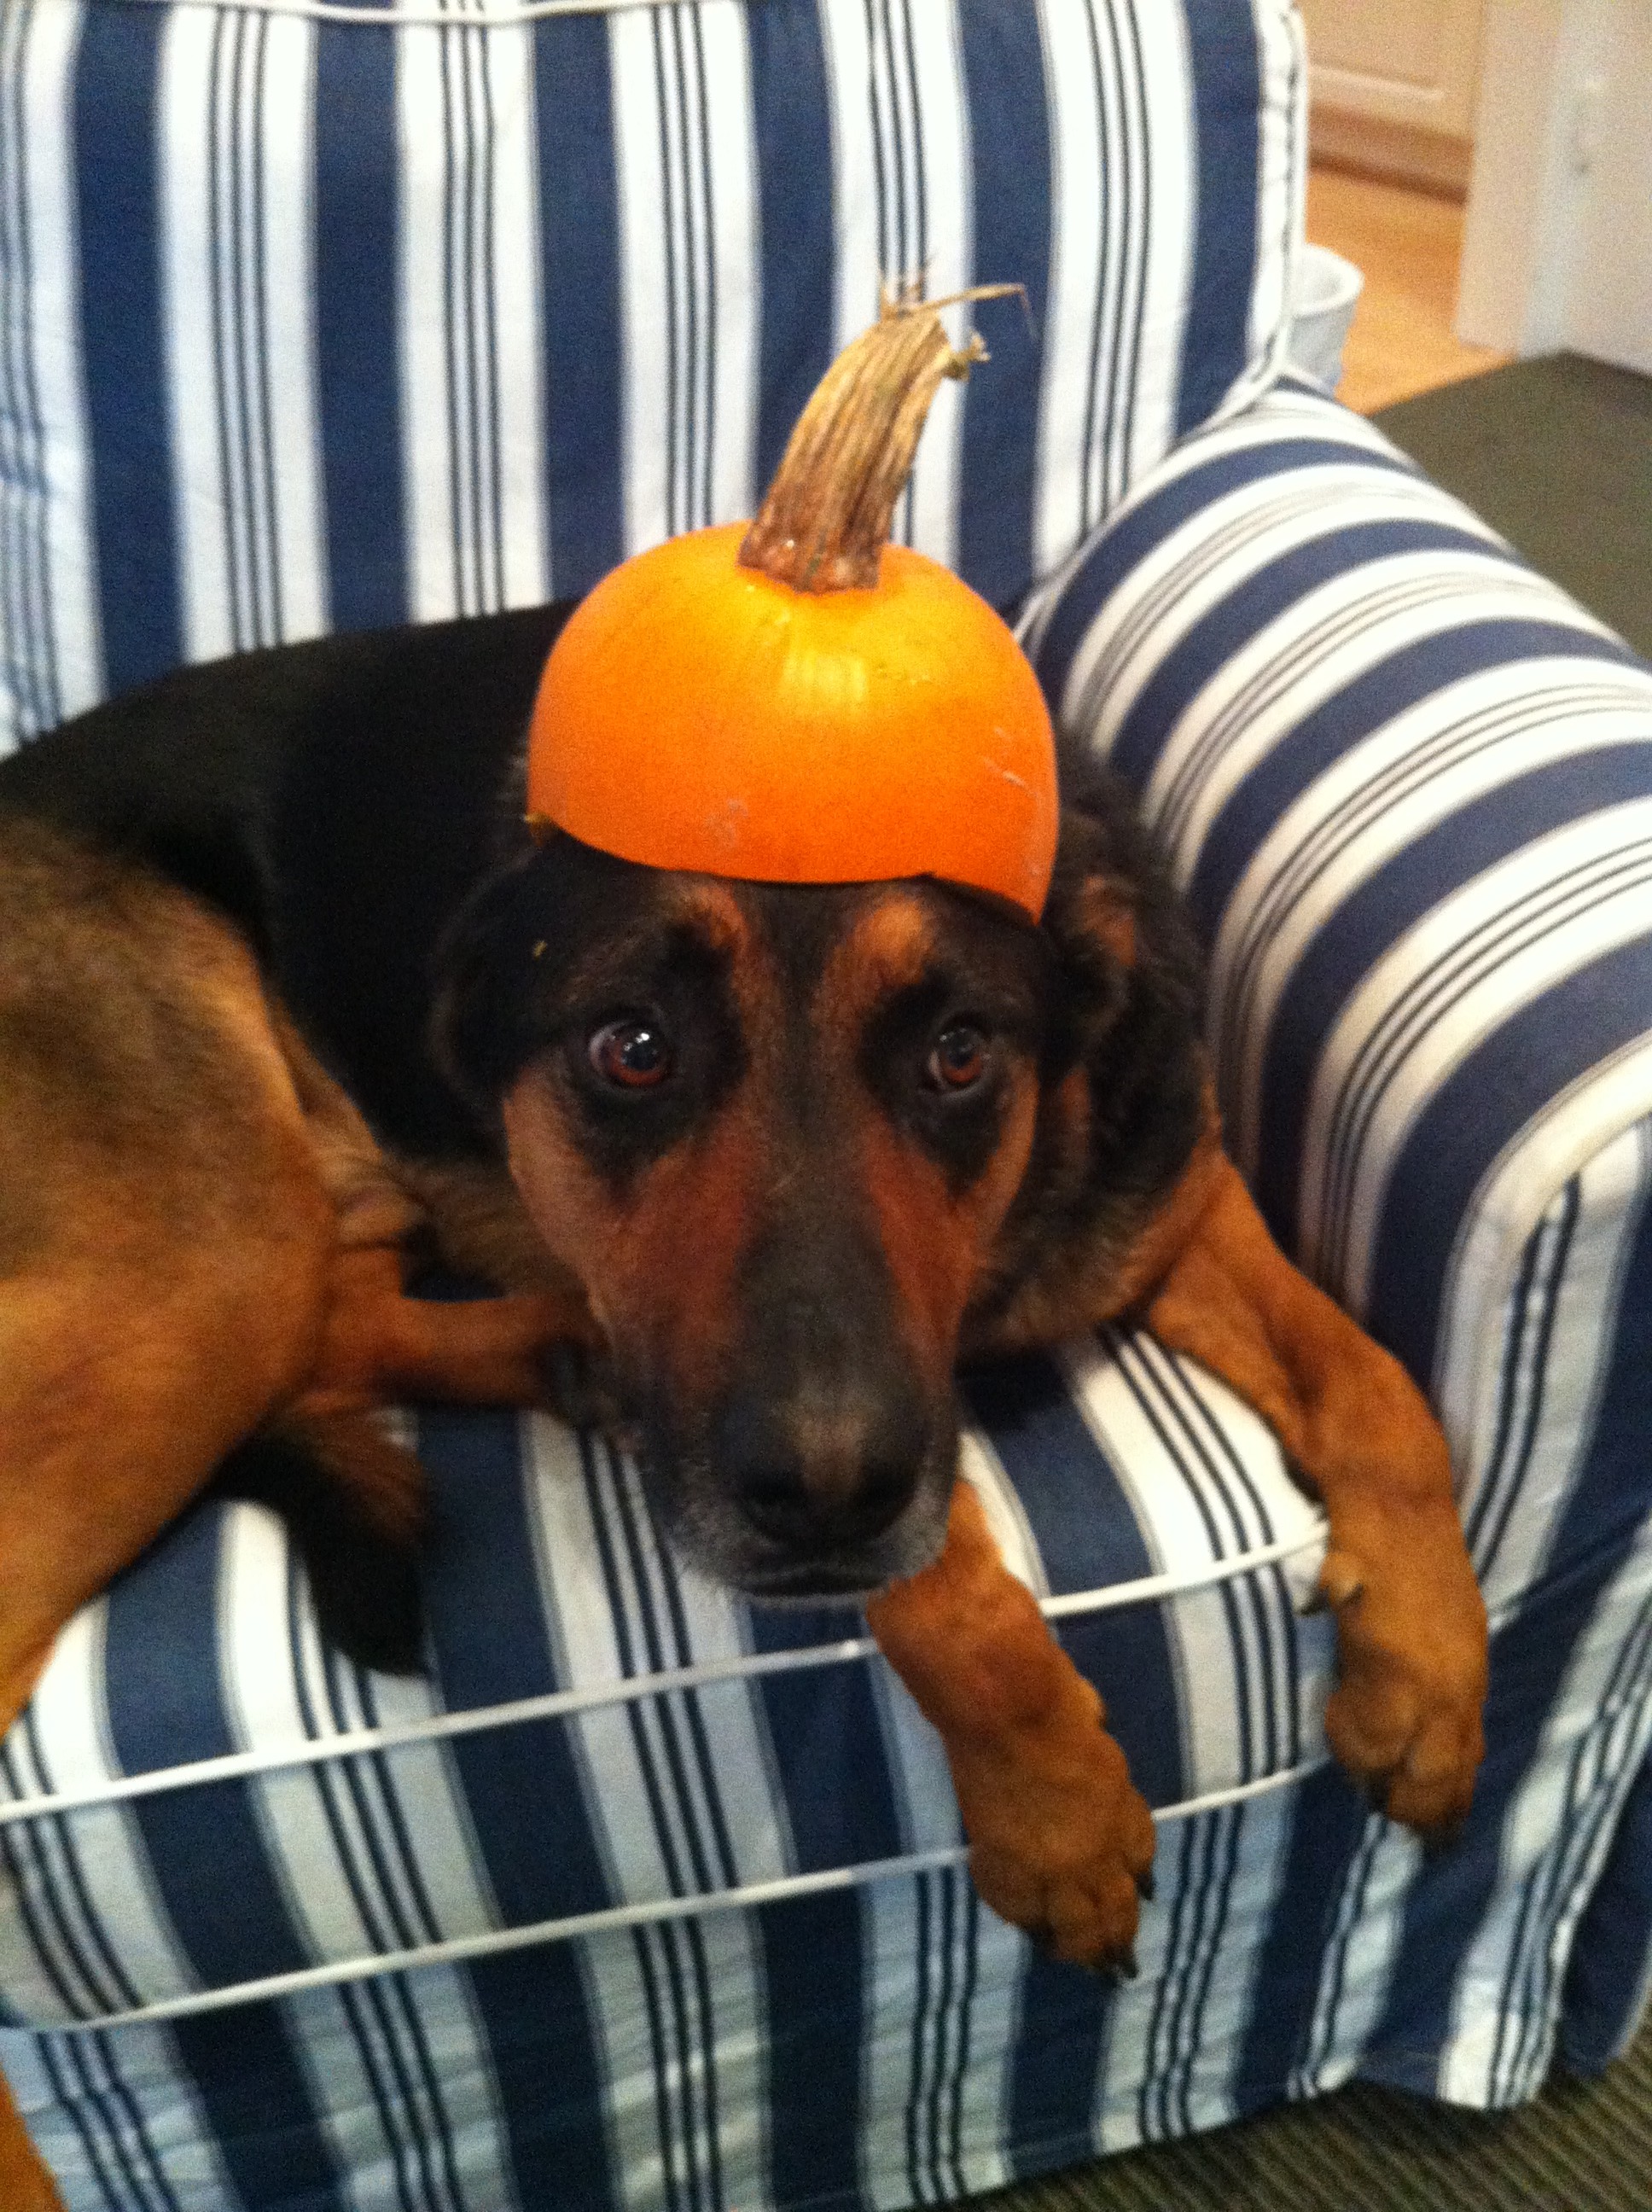 German Shepherd Mix with Half a Pumpkin on his Head